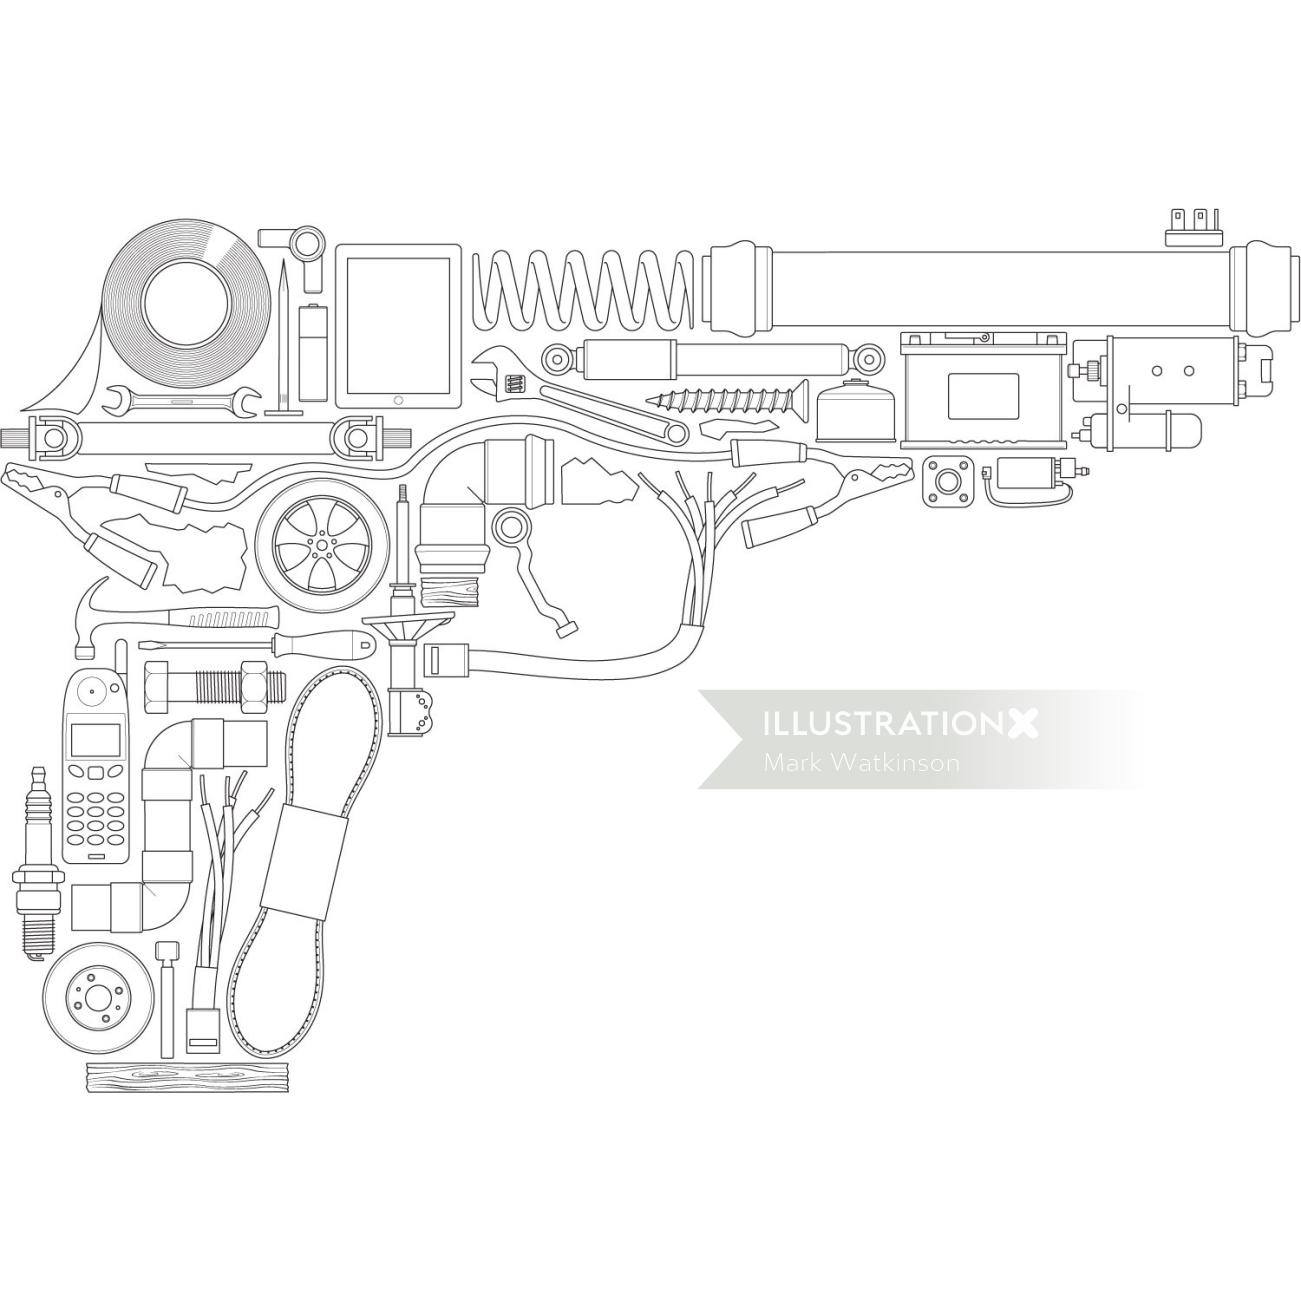 Black and white illustration of gun architecture 